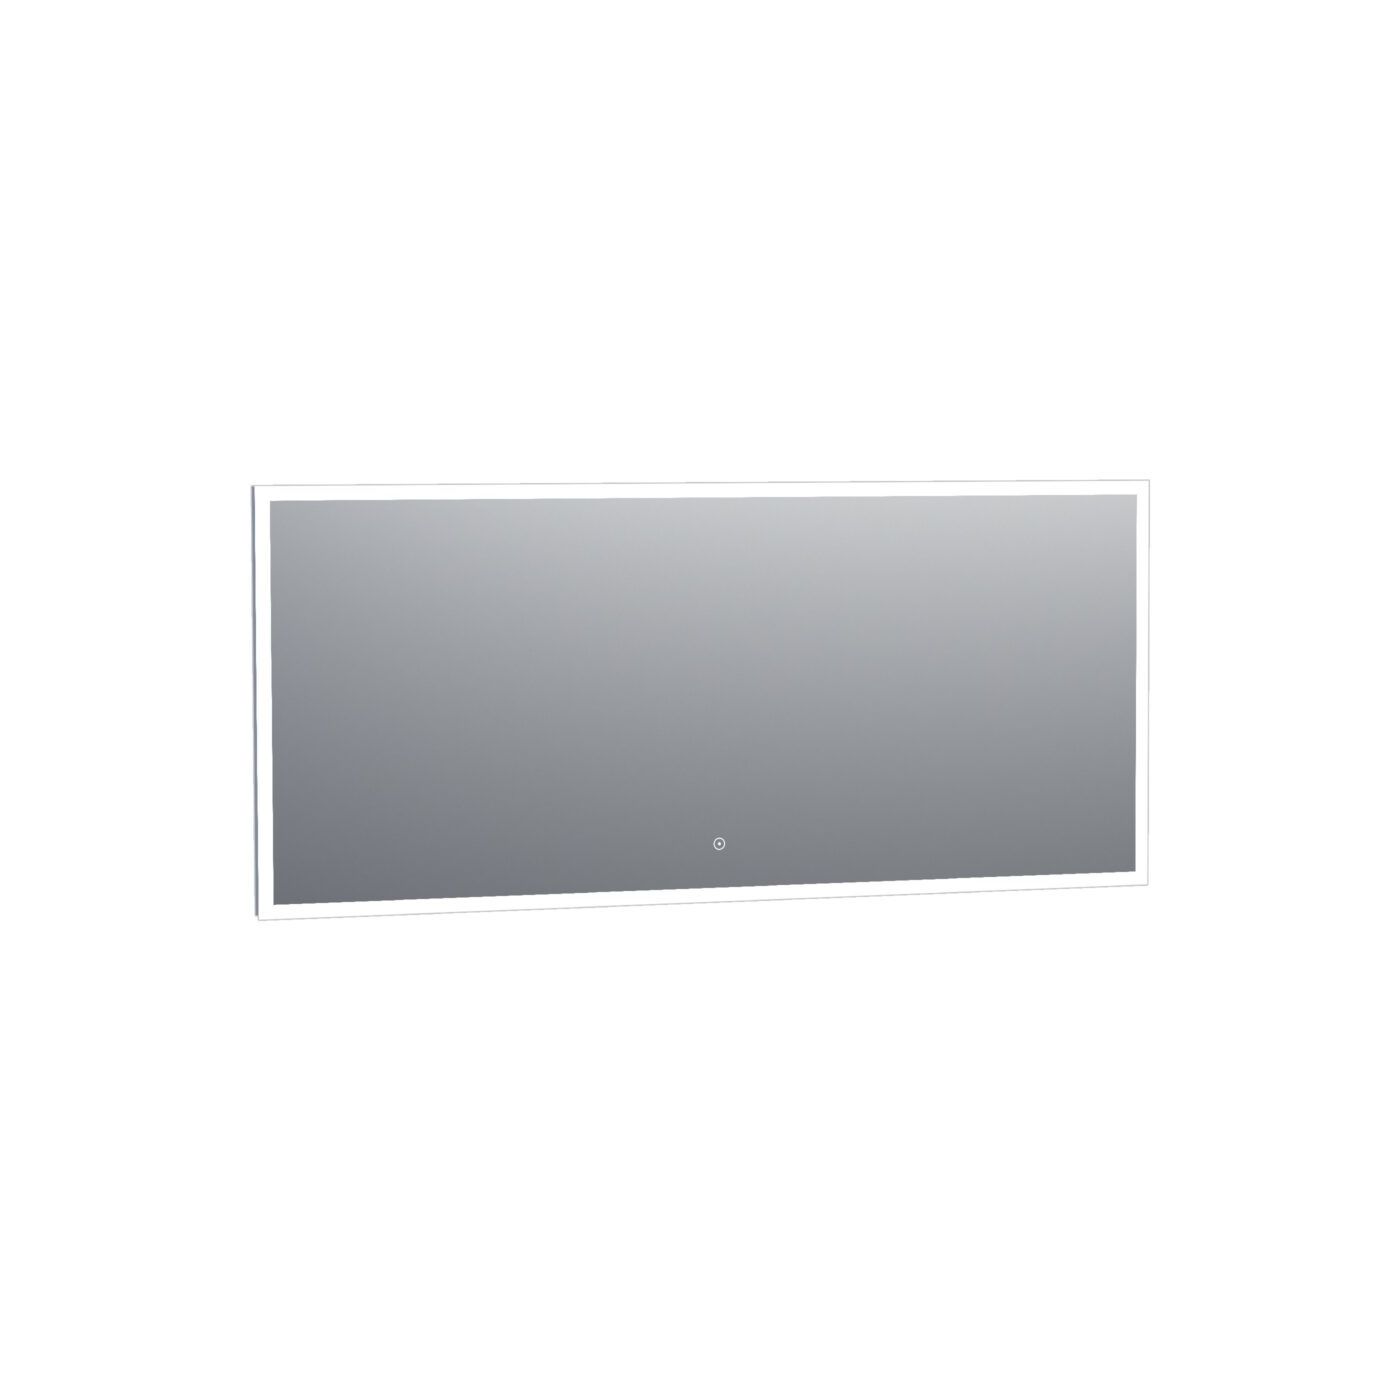 Tapo Edge spiegel 160x70 mat chroom